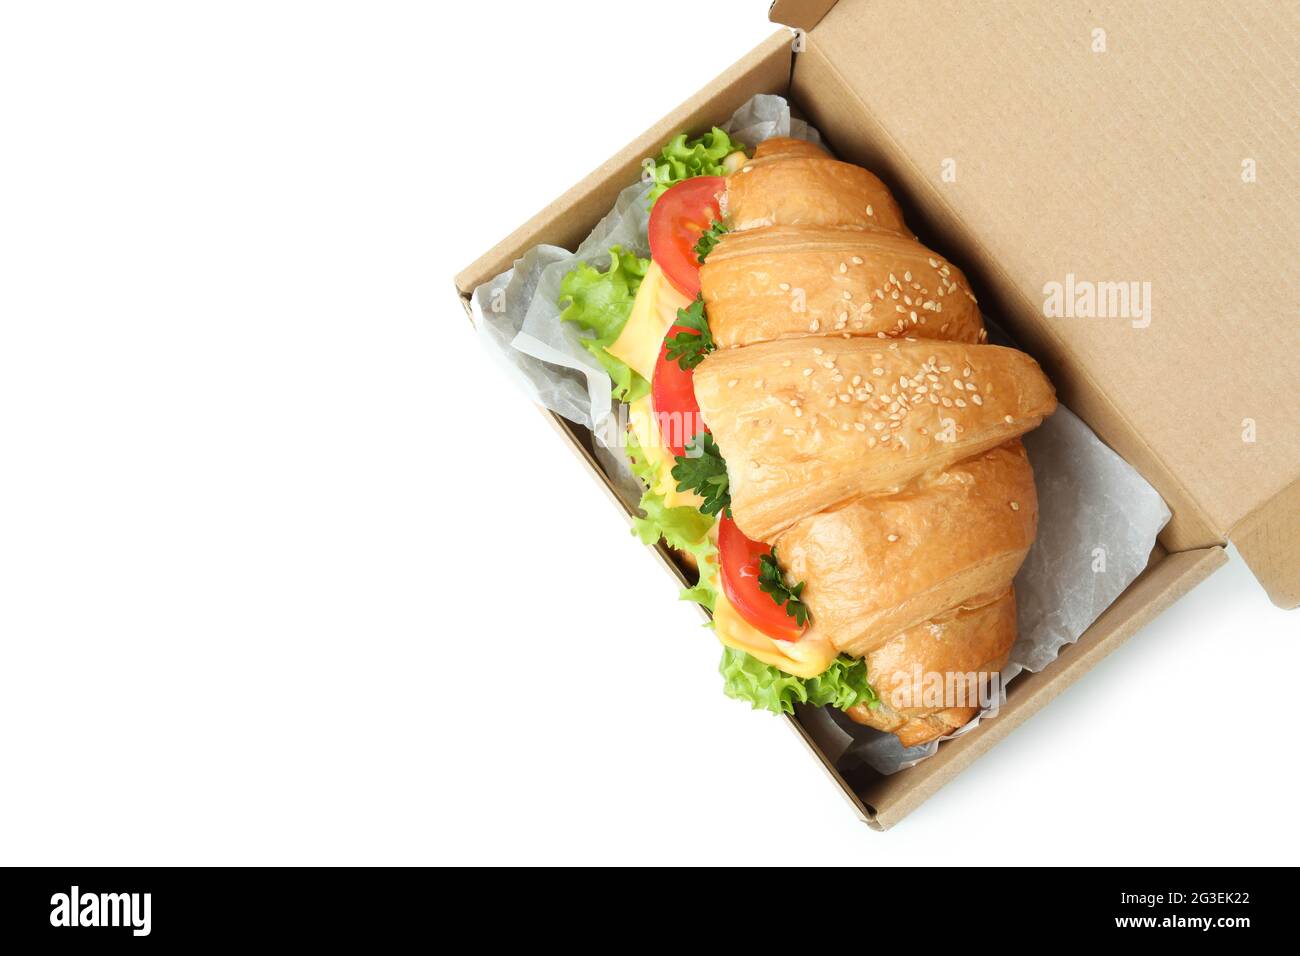 https://c8.alamy.com/comp/2G3EK22/carton-box-with-croissant-sandwich-isolated-on-white-background-2G3EK22.jpg